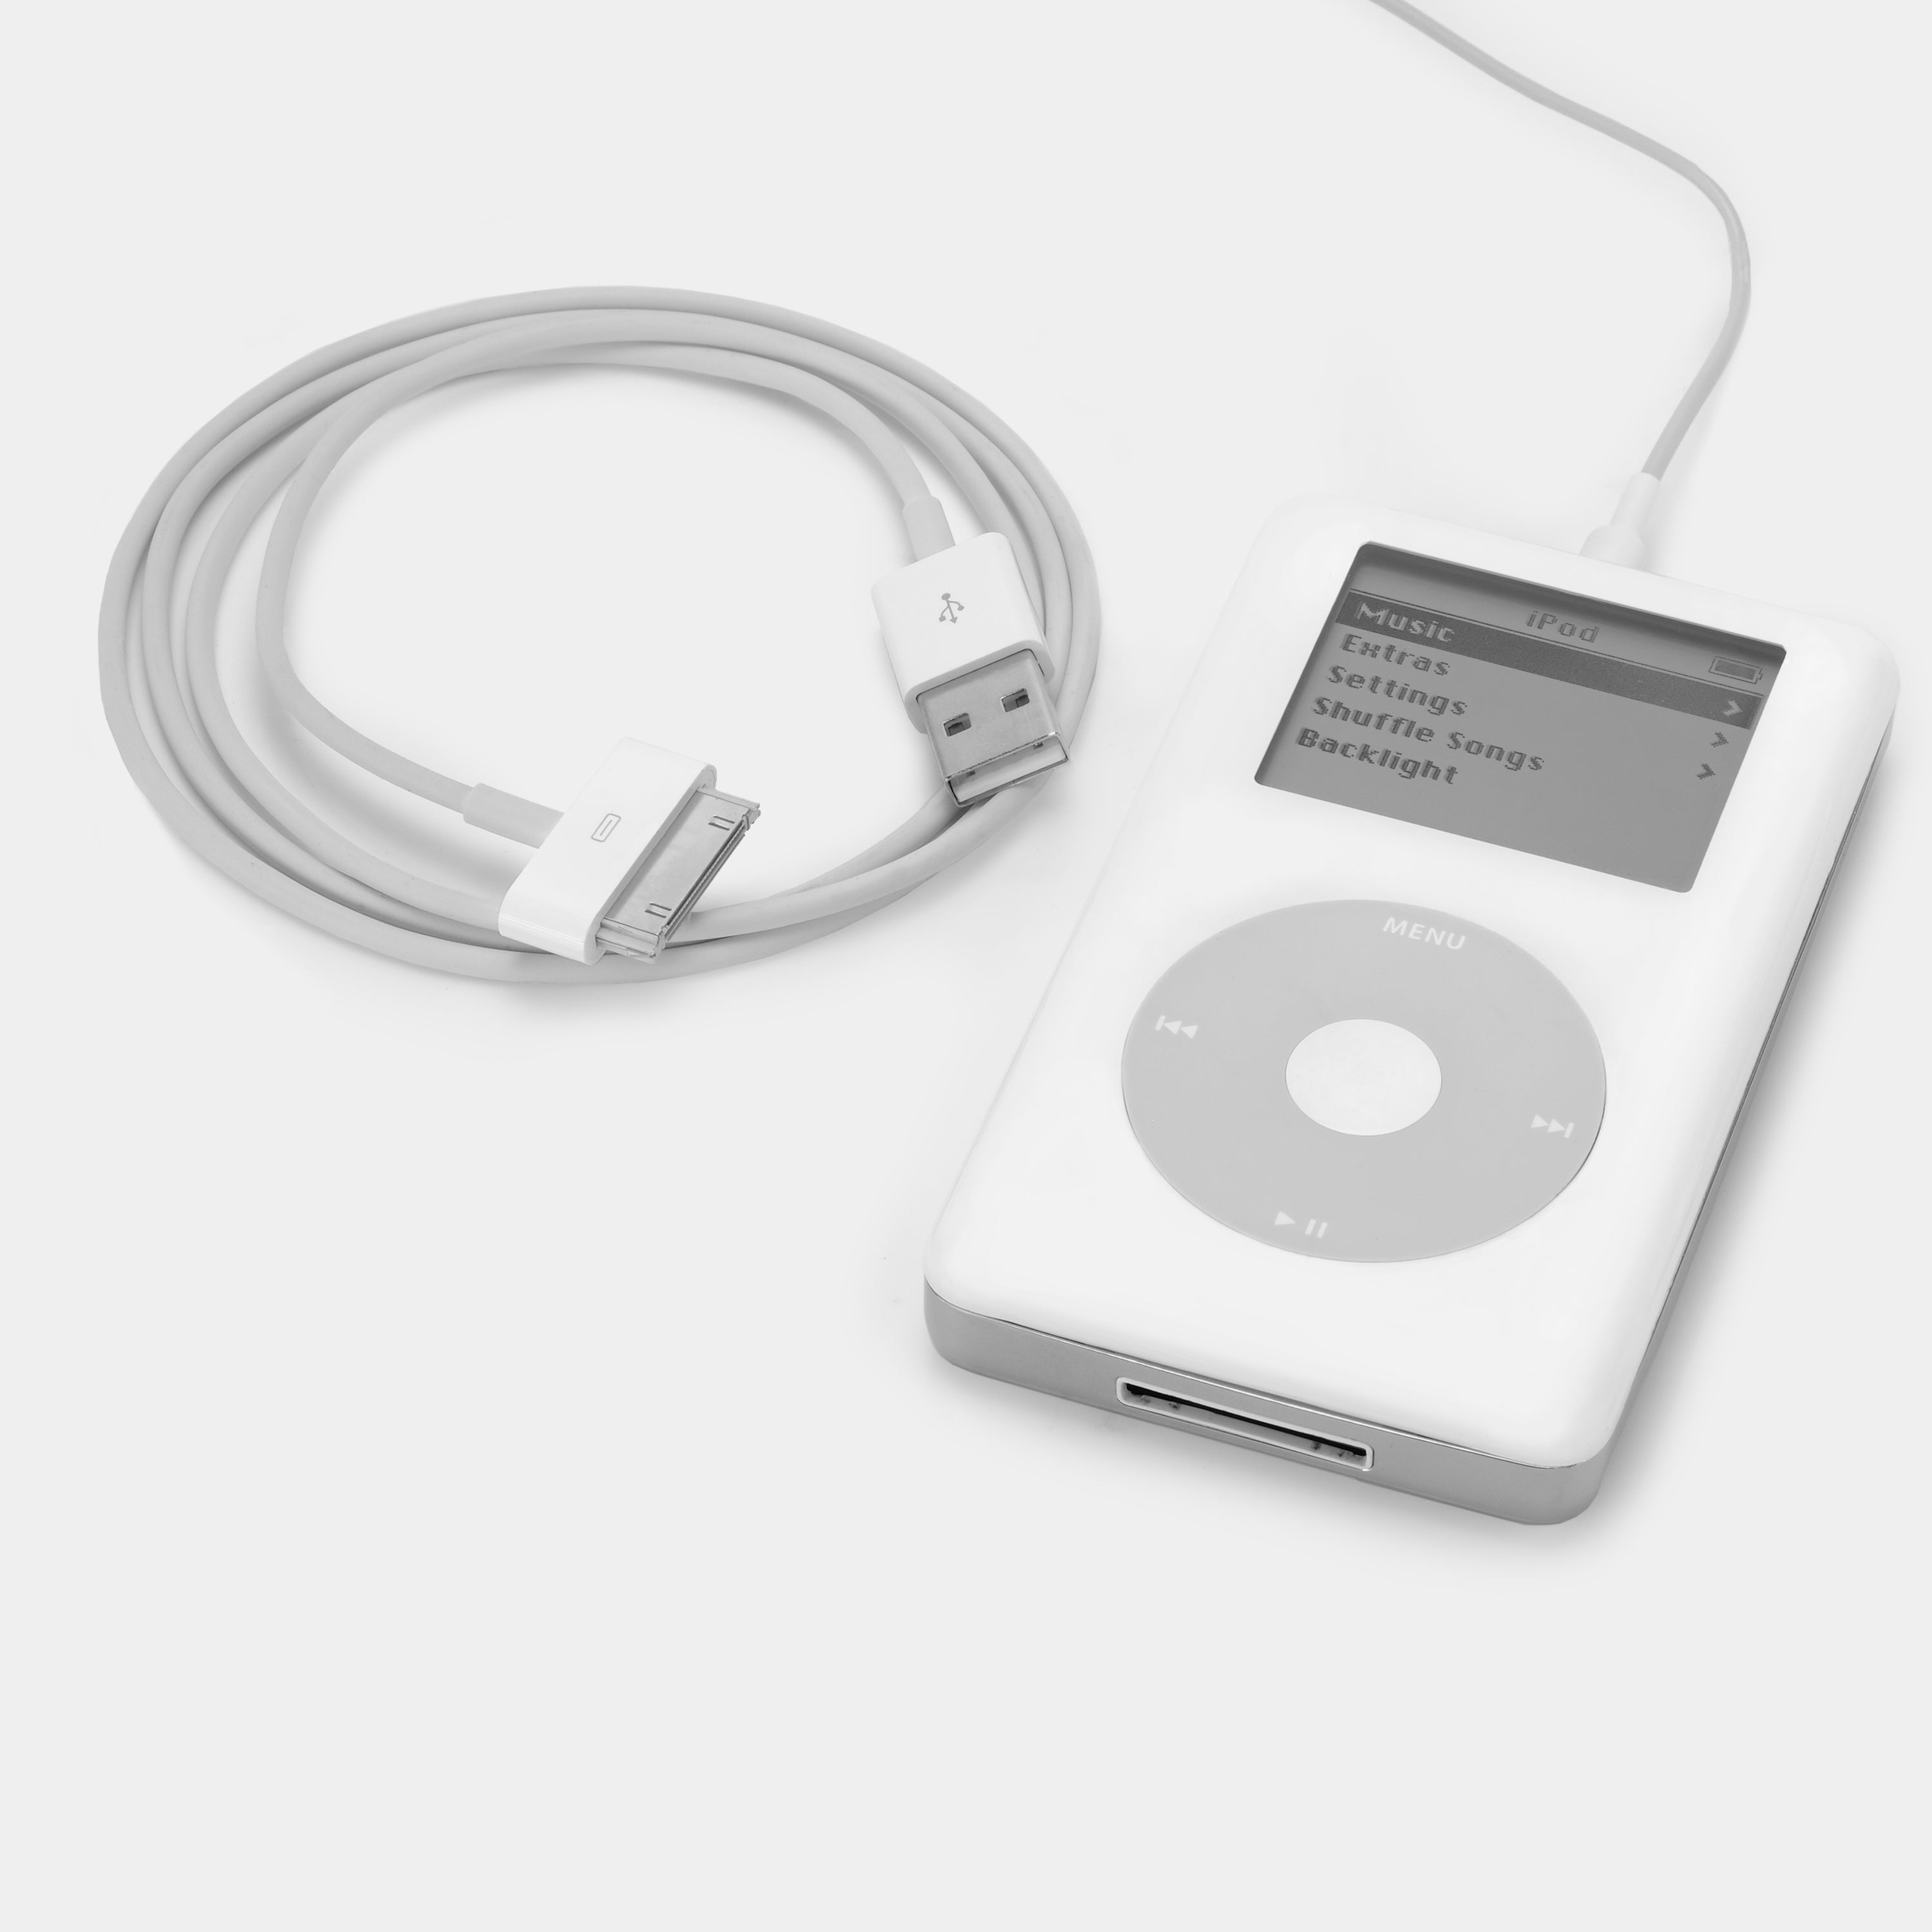 Apple iPod (4th Generation) MP3 Player